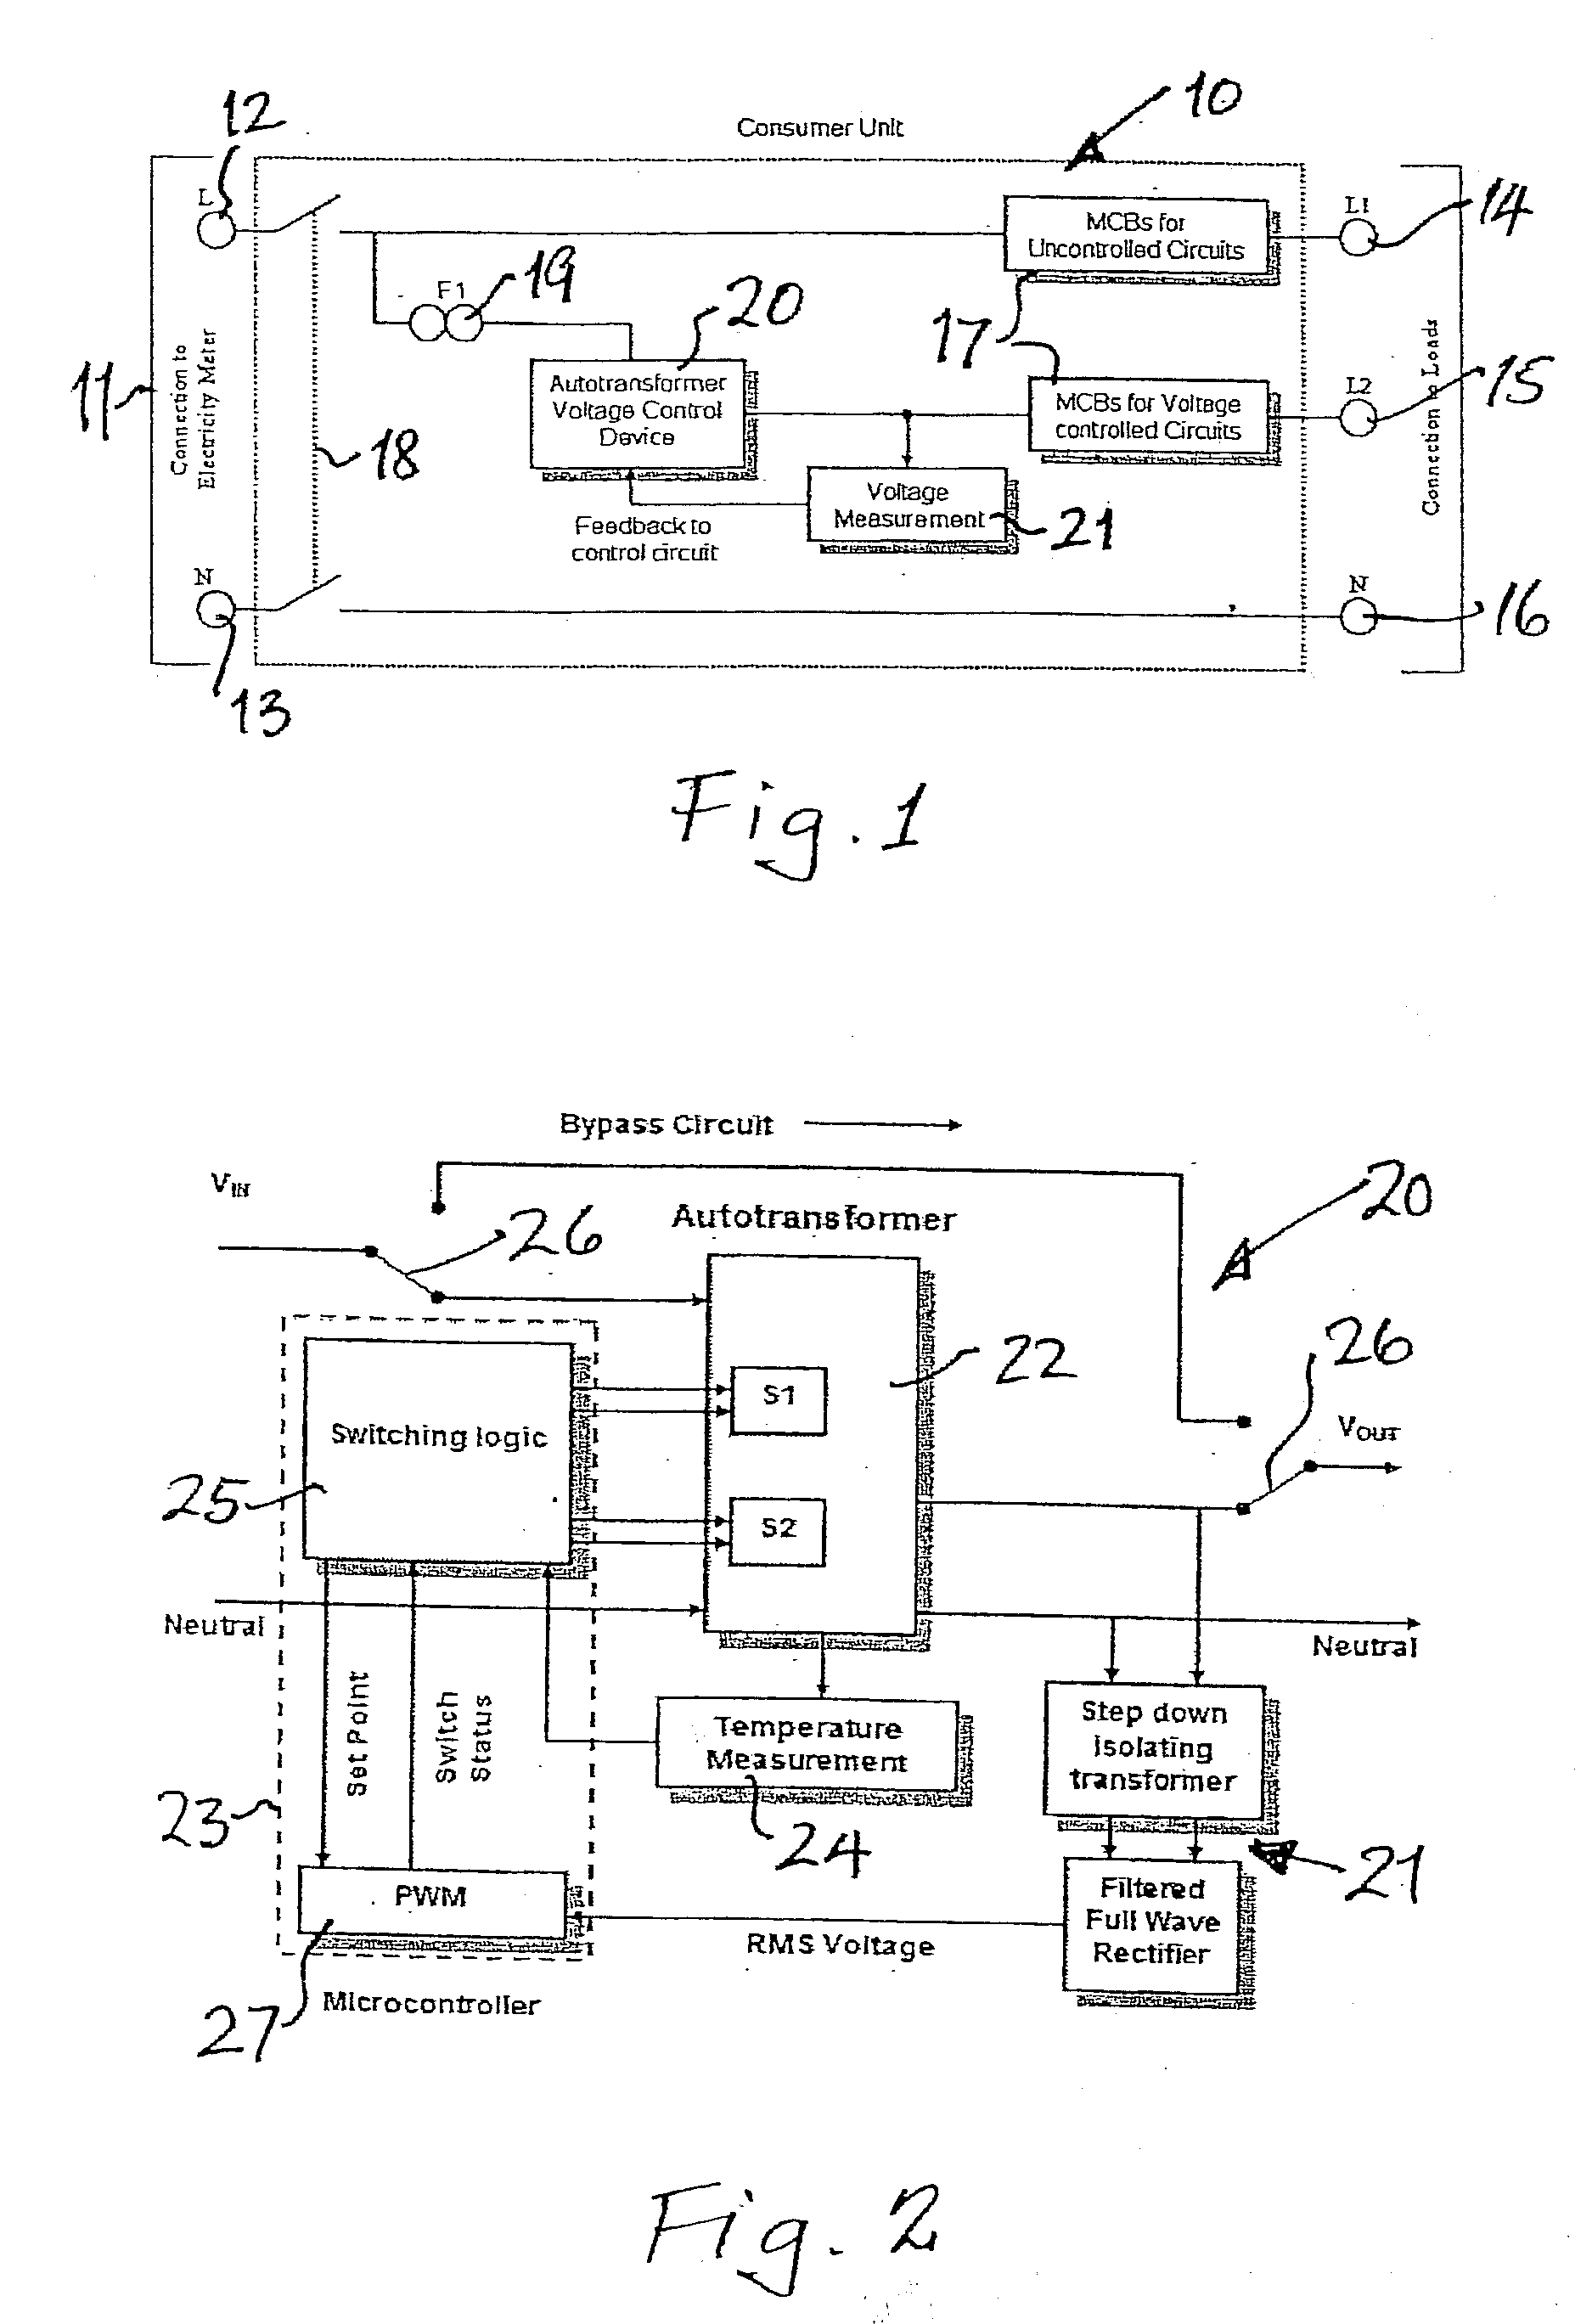 Voltage regulation device